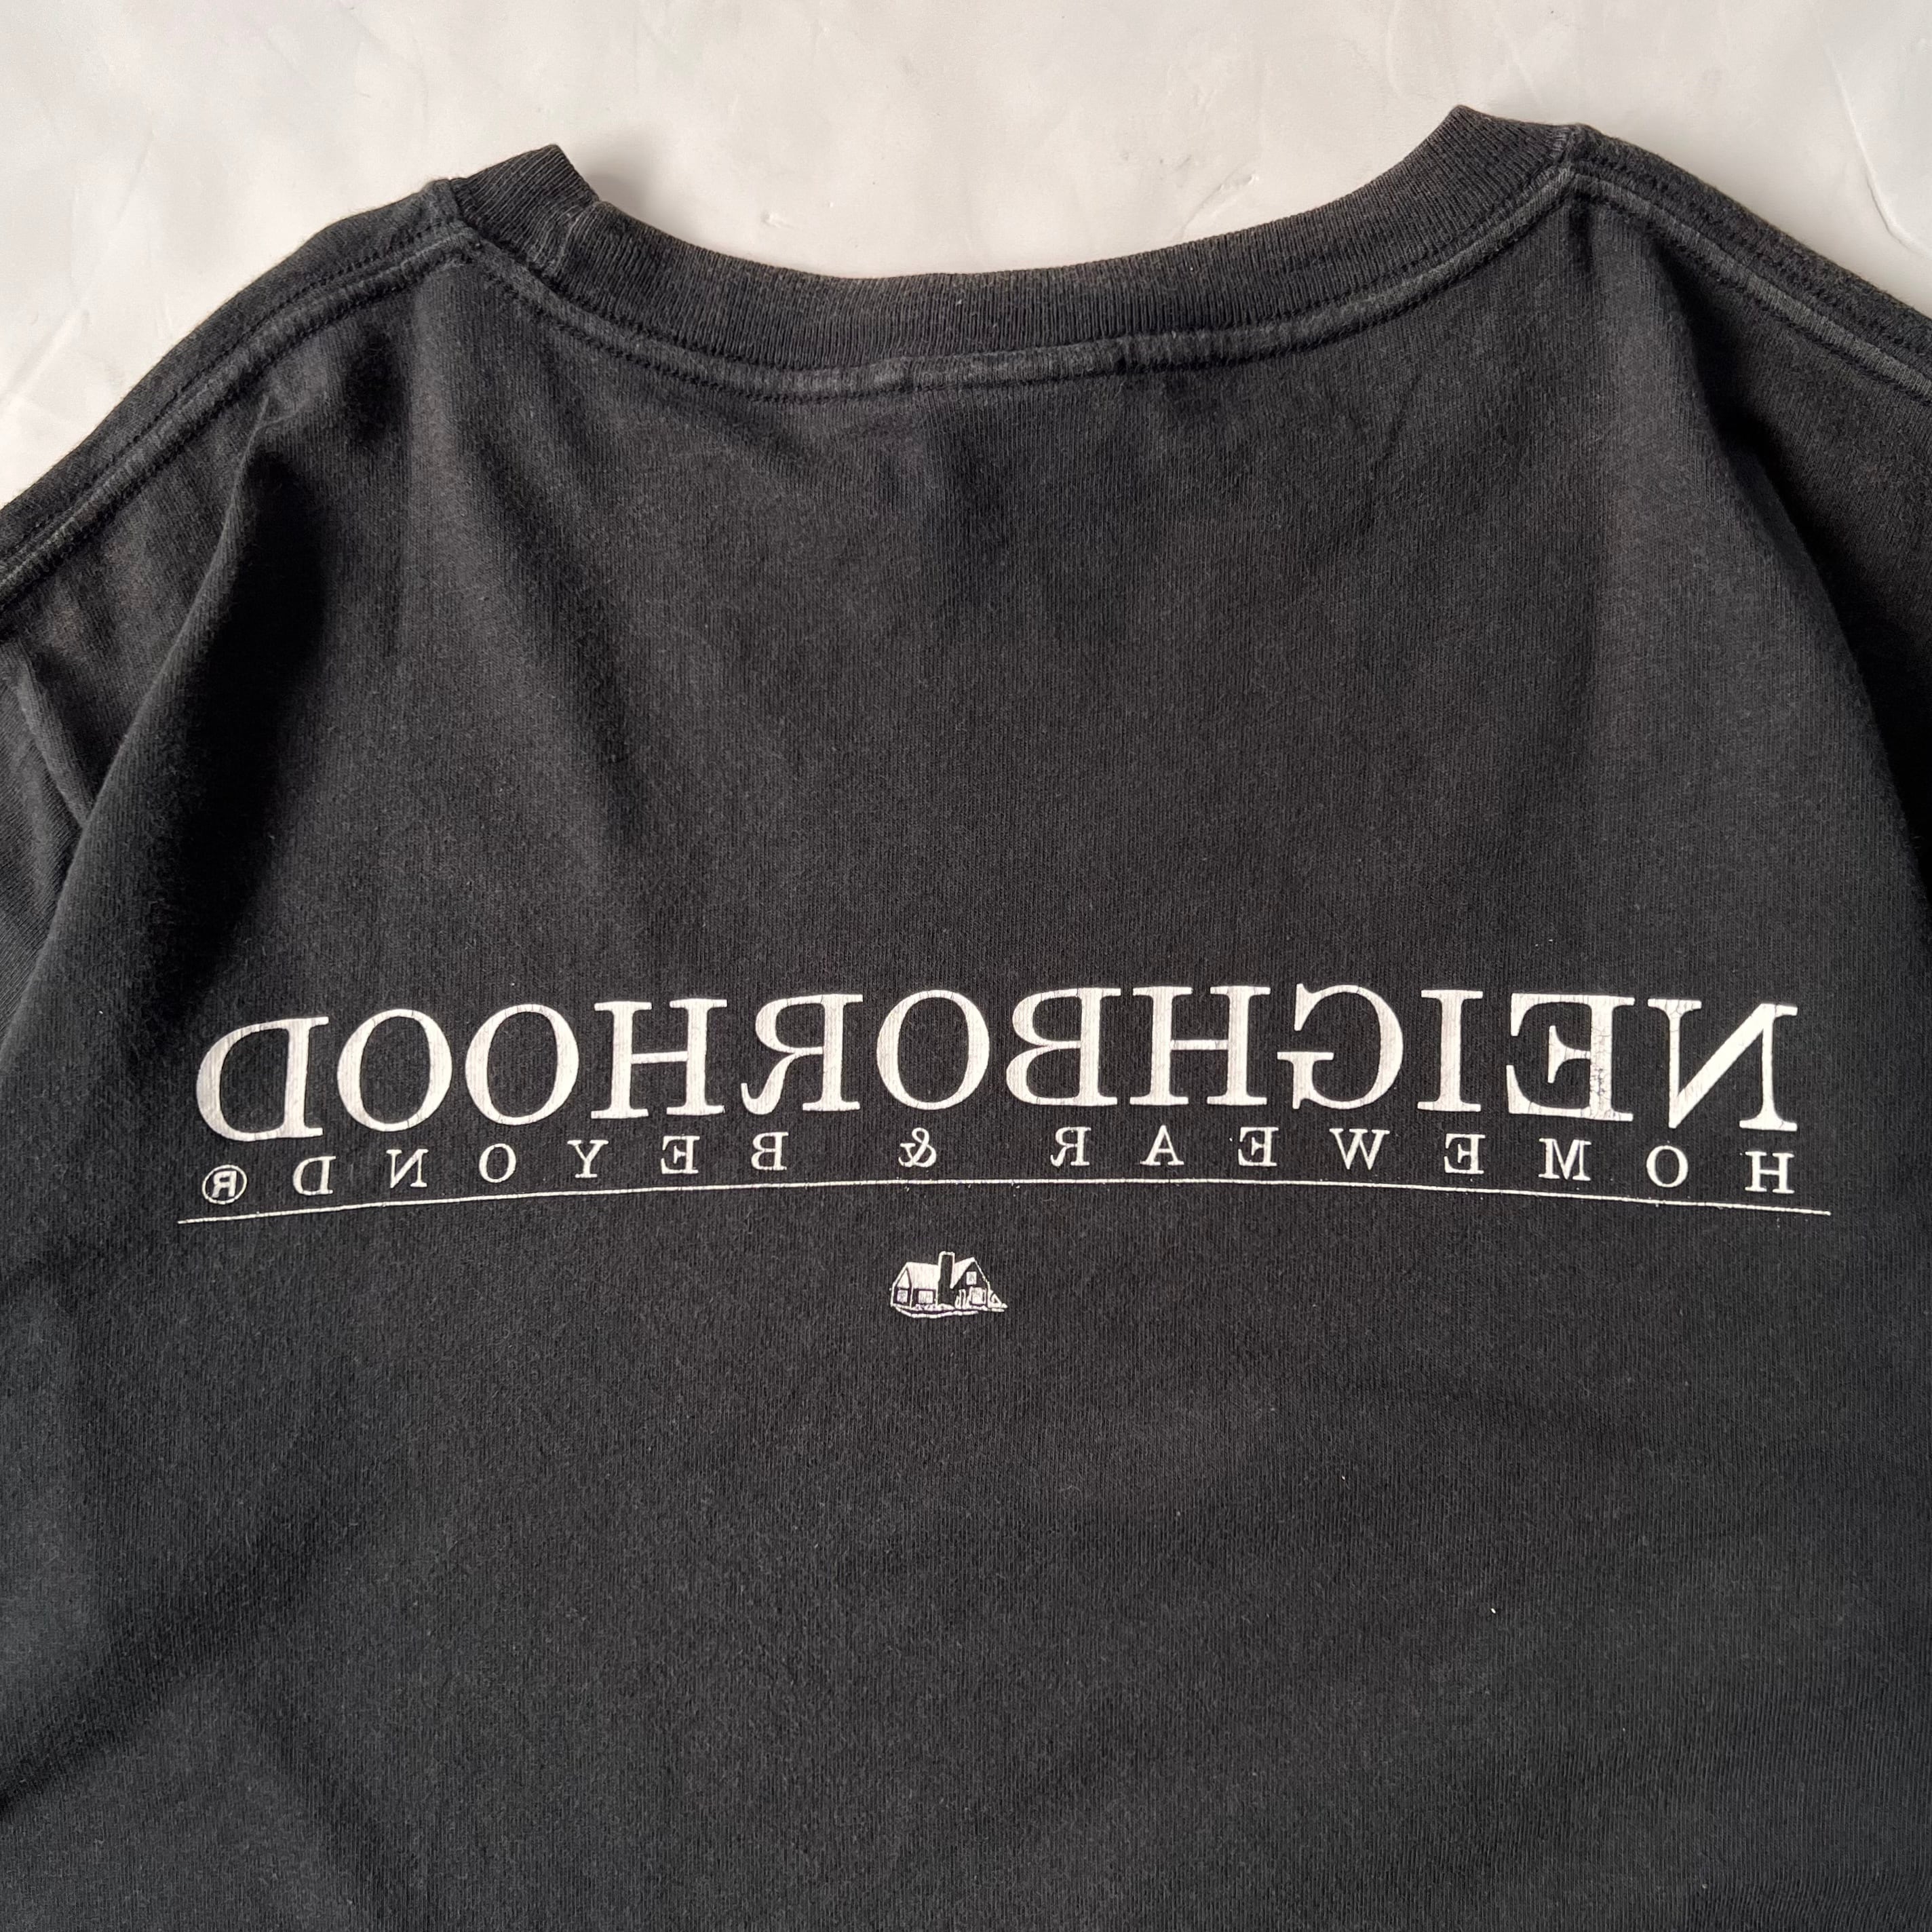 2000s “NEIGHBORHOOD” logo tee black ネイバーフッド ロゴ tシャツ